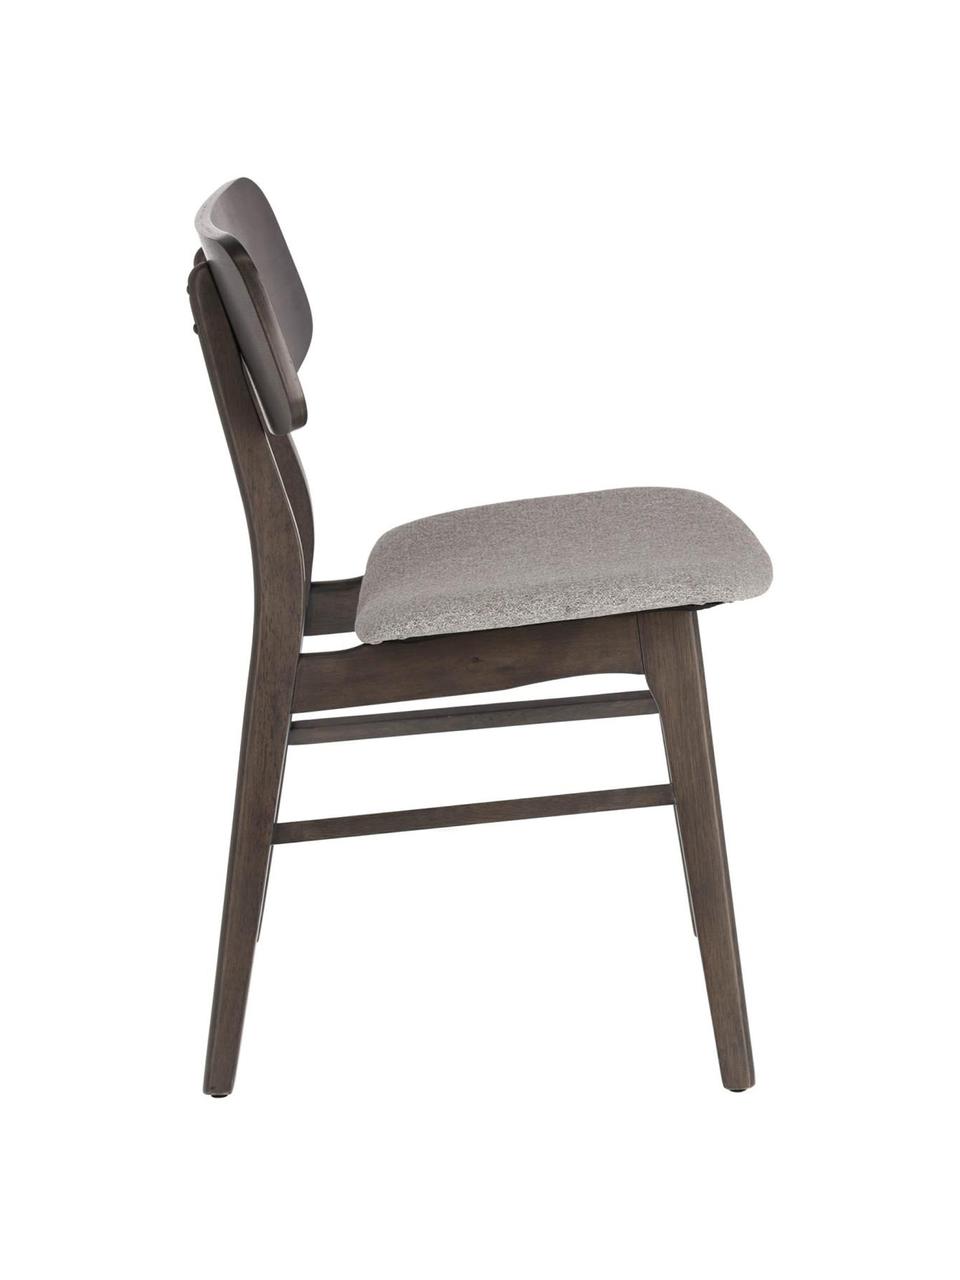 Houten stoelen Selia, 2 stuks, Frame: massief rubberhout, essen, Bekleding: polyester, Grijstinten, B 48 x D 53 cm